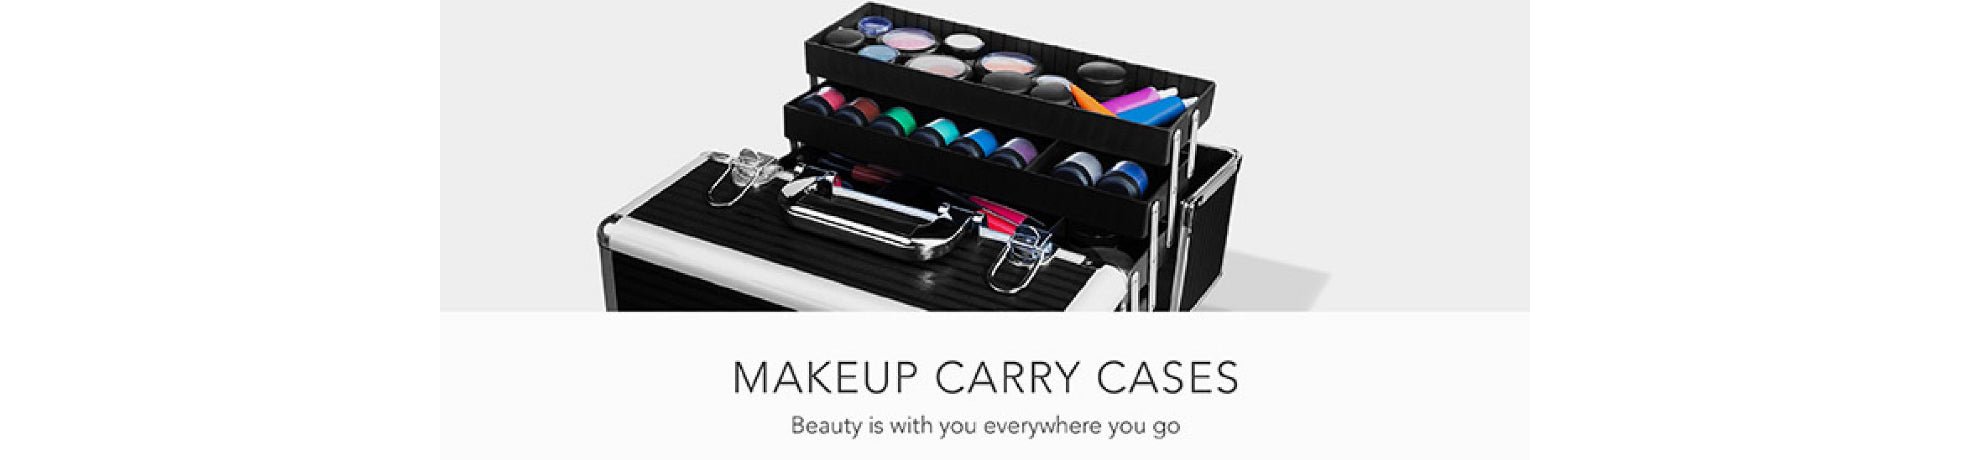 Makeup Case - Portable, Organized Beauty Storage for cosmetics on the go. Shop at Kids Mega Mart Australia